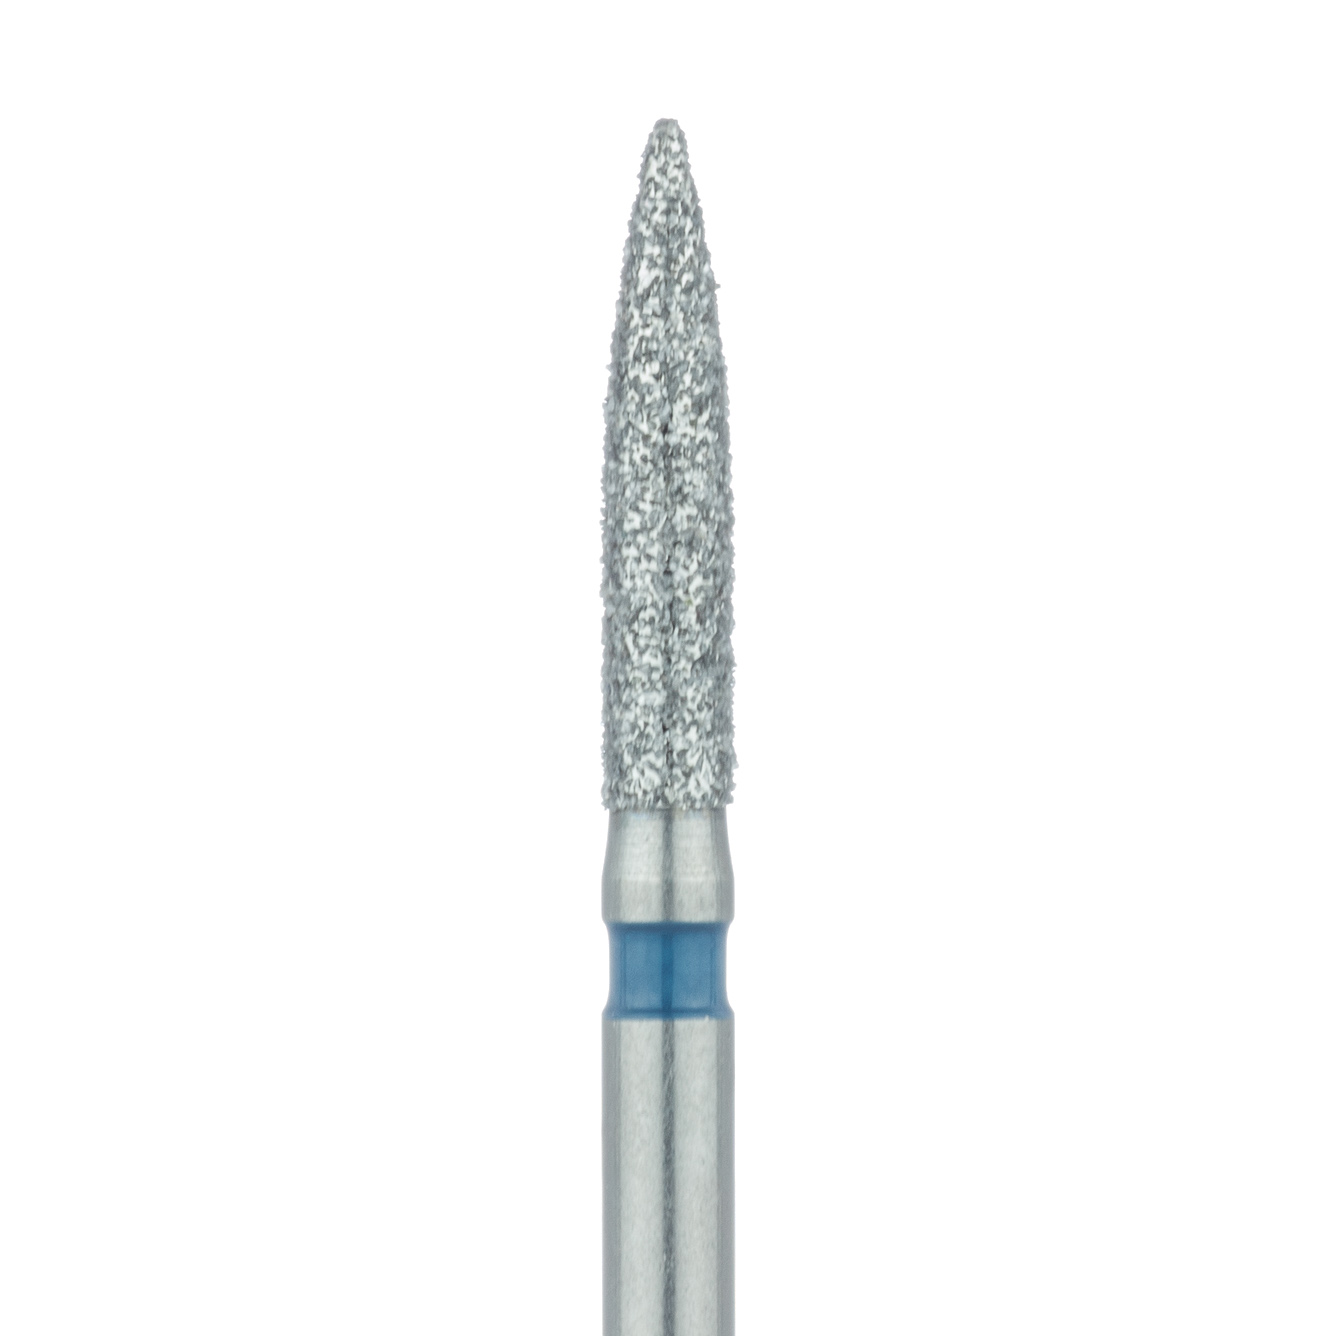 862-016-FG Flame Diamond Bur, 1.6mm Ø, Medium, FG